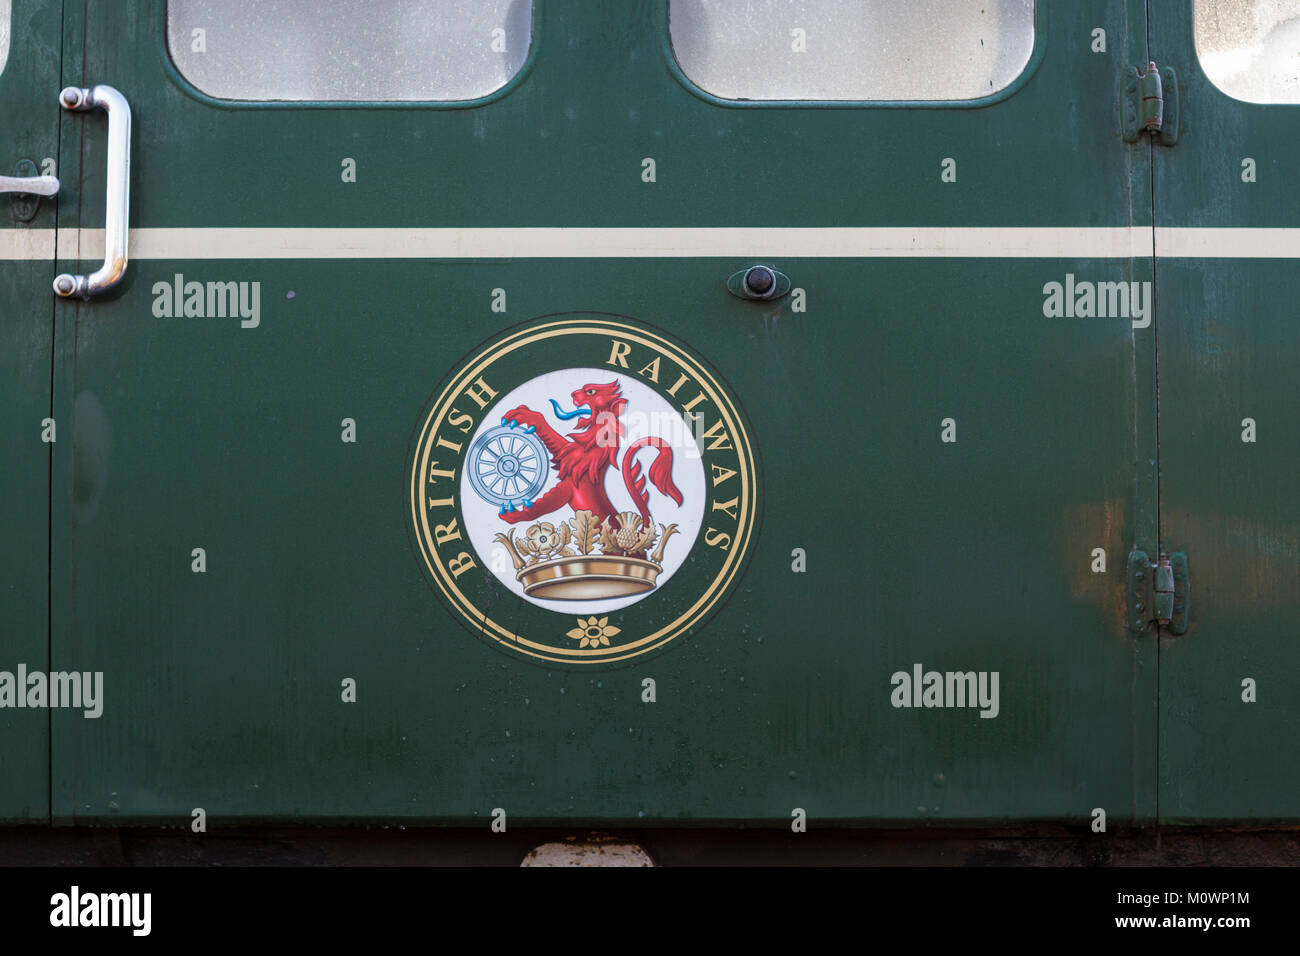 British Railways logo on train carriage Stock Photo